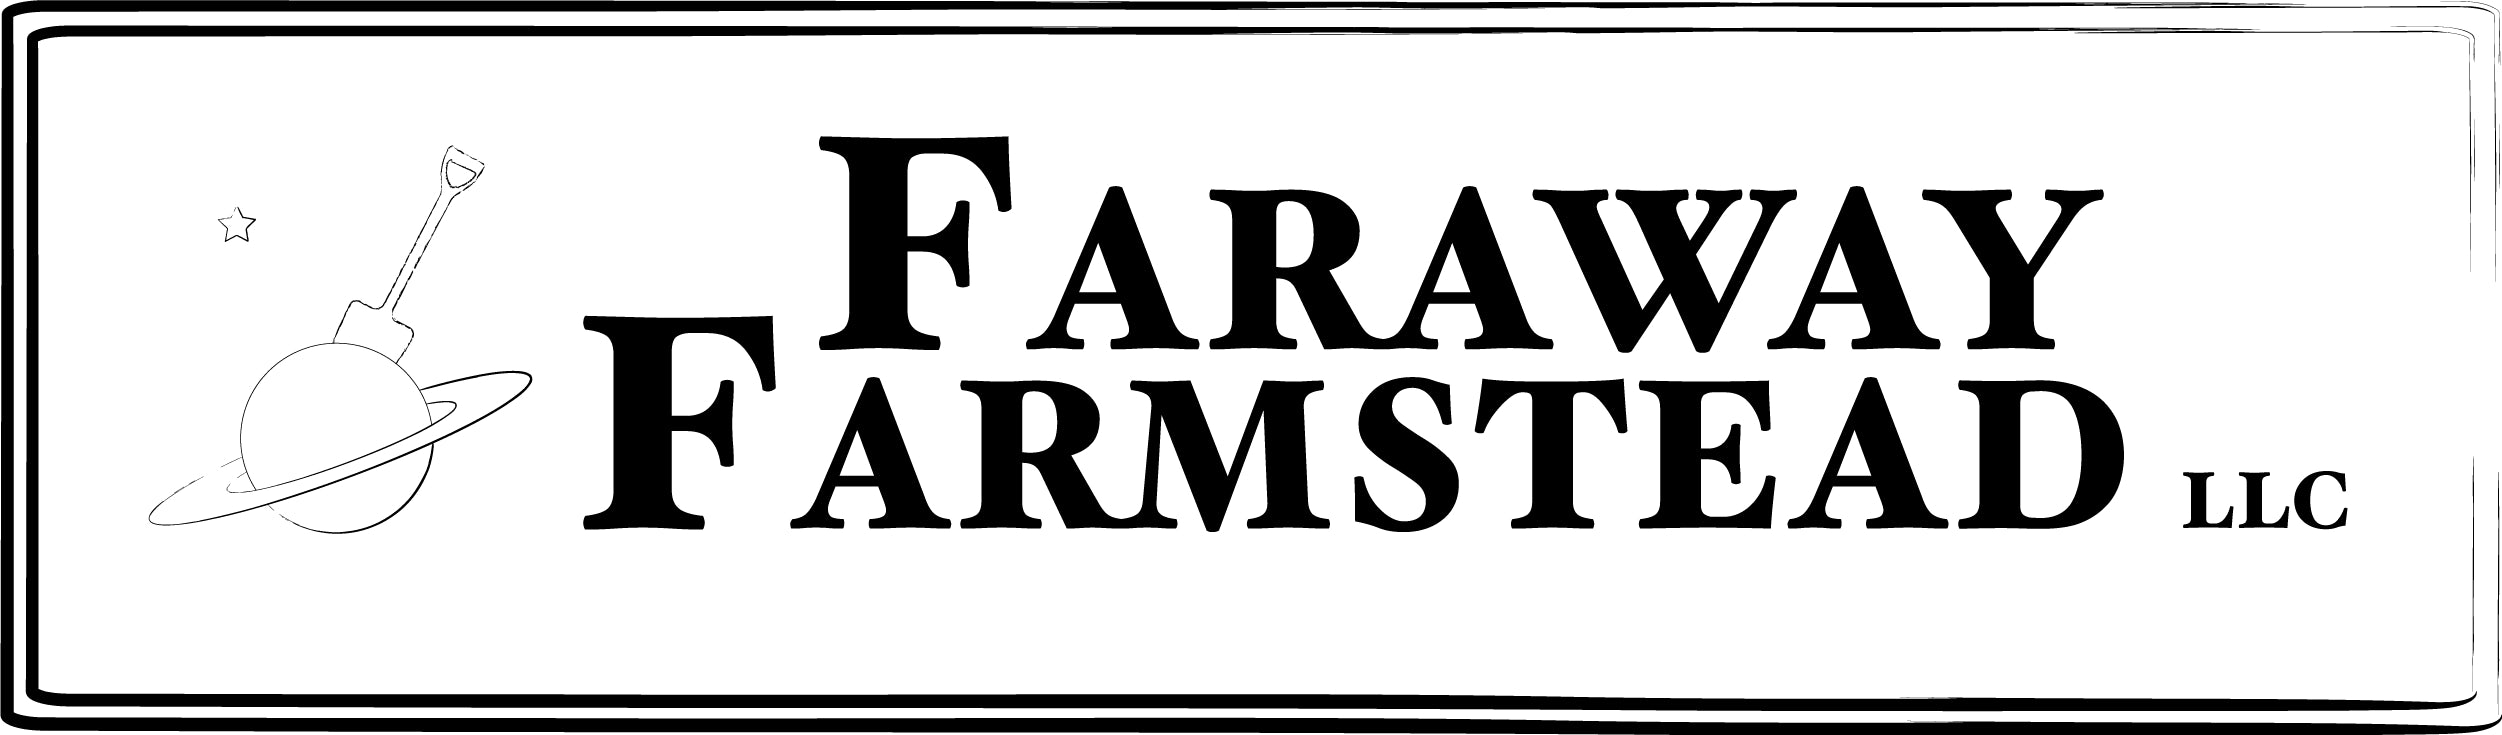 Faraway Farmstead banner